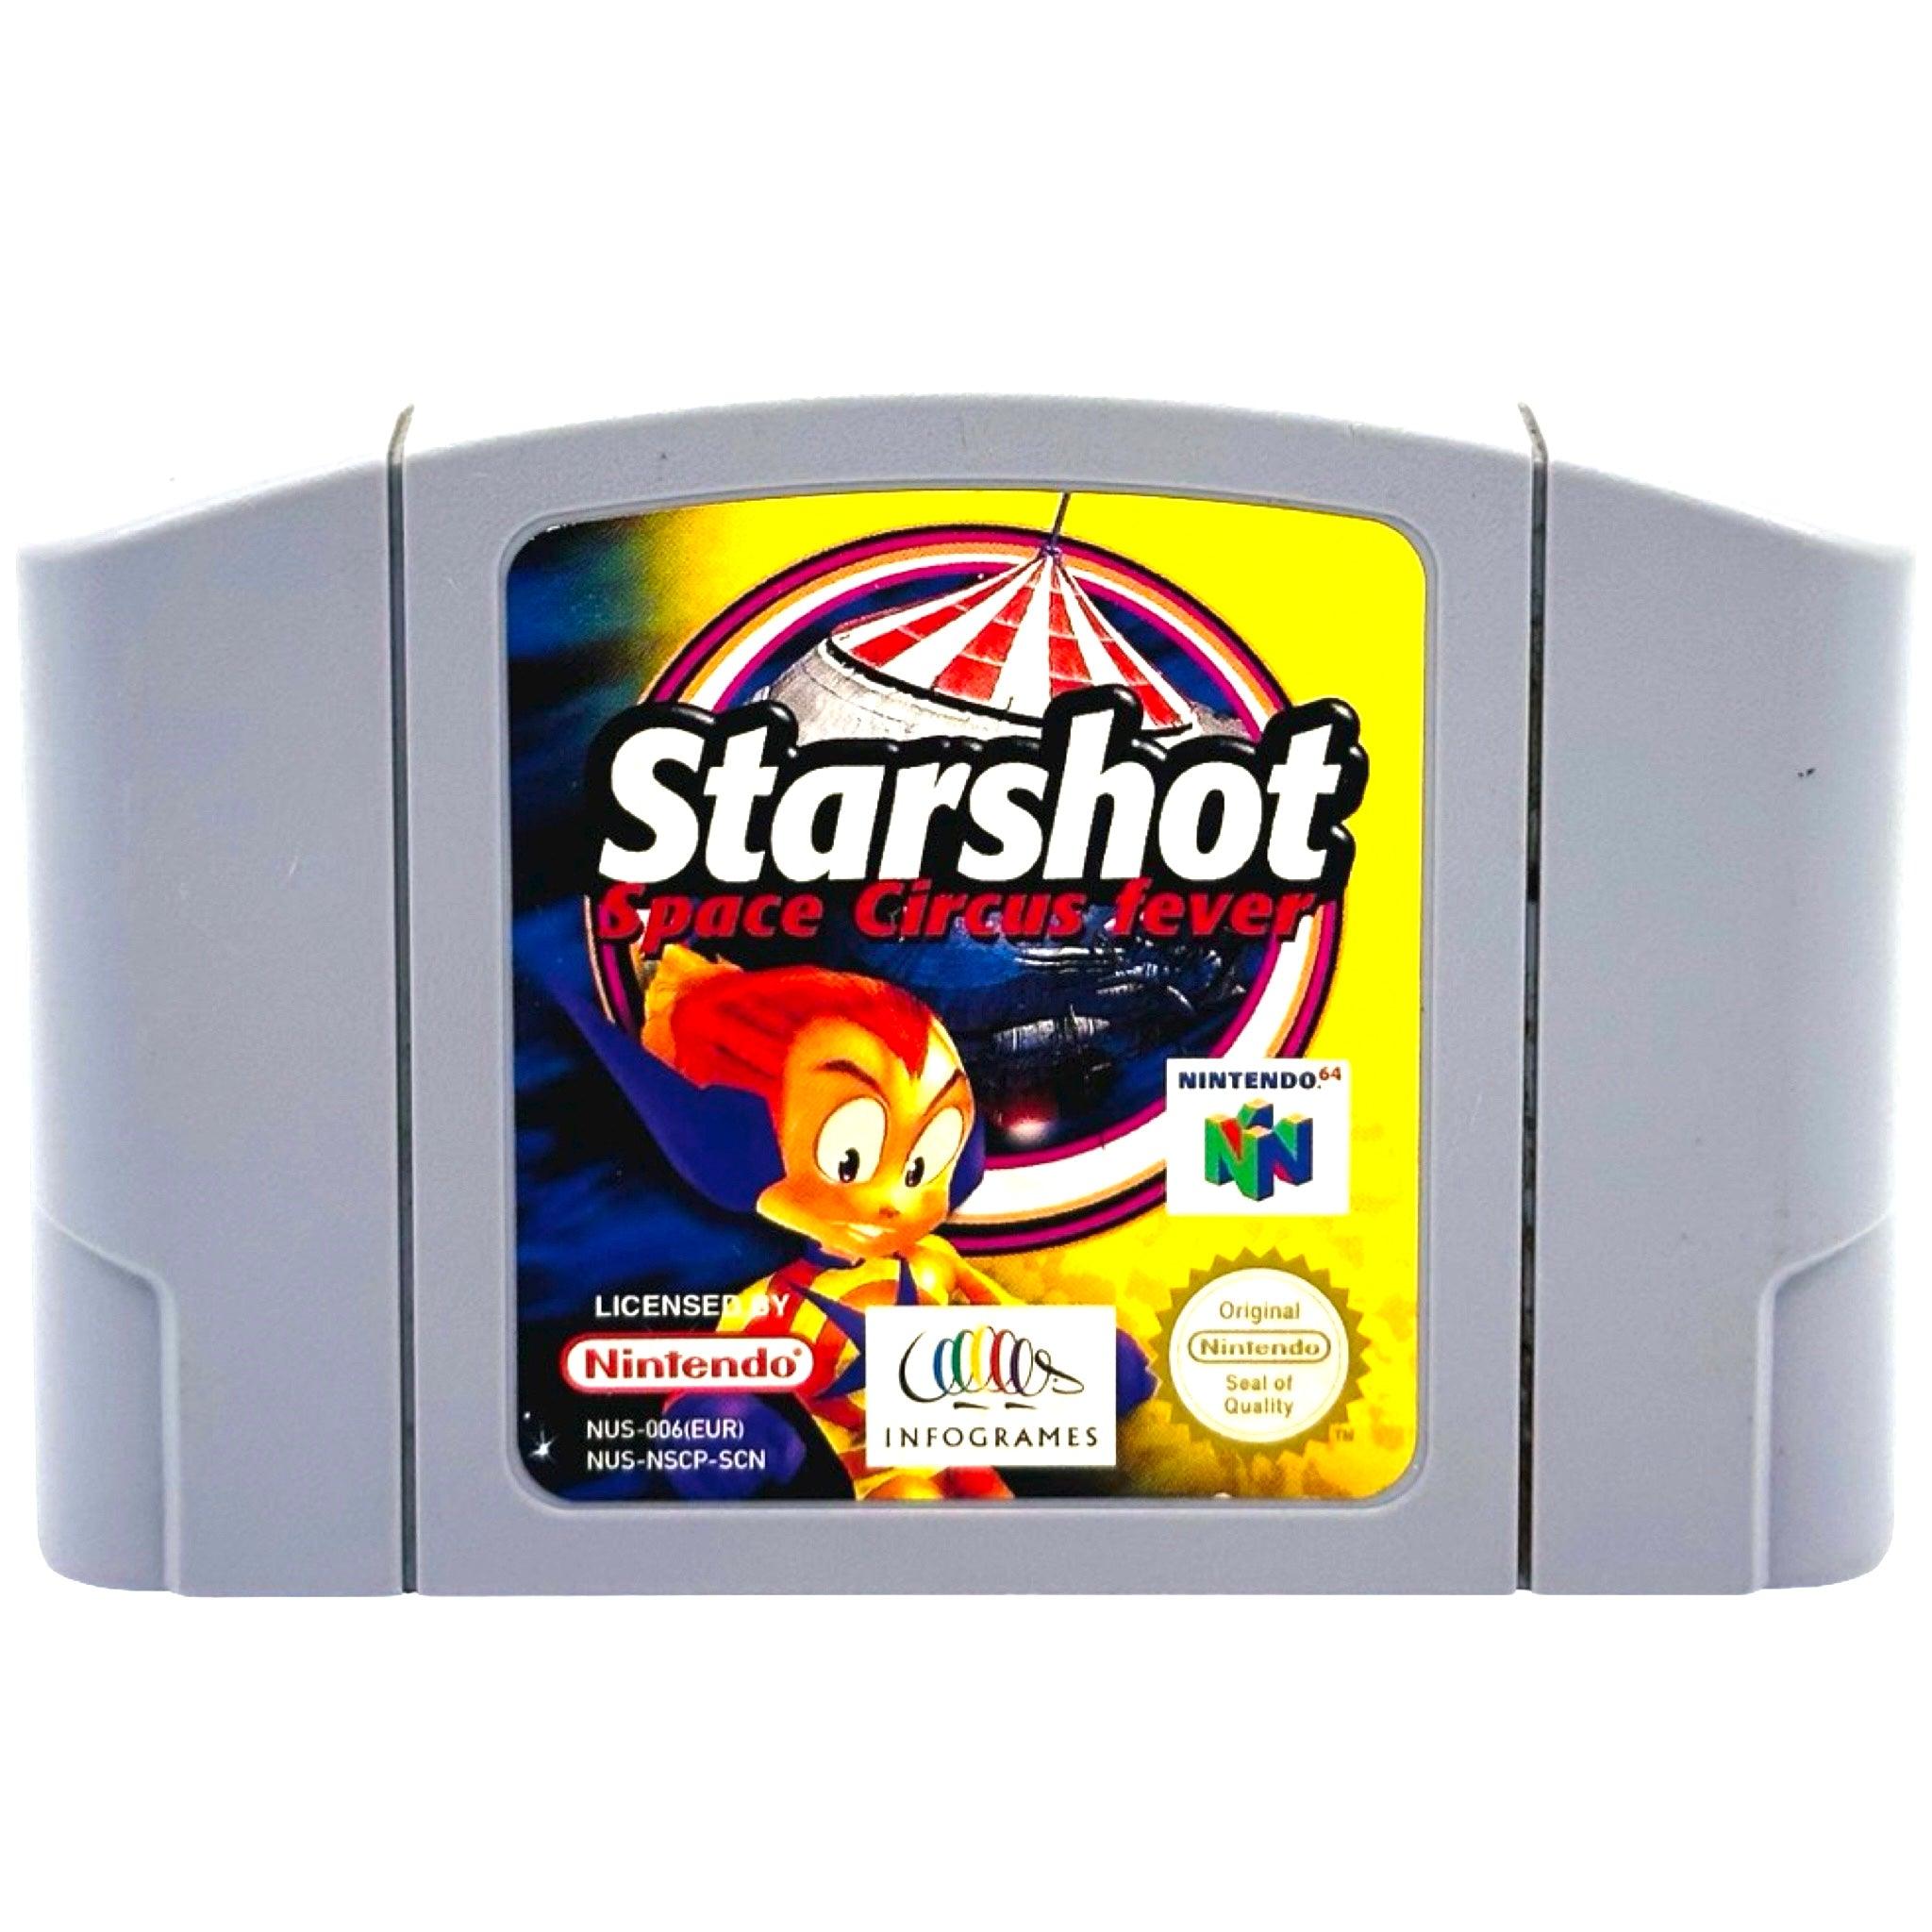 N64: Starshot Space Circus Fever - RetroGaming.no